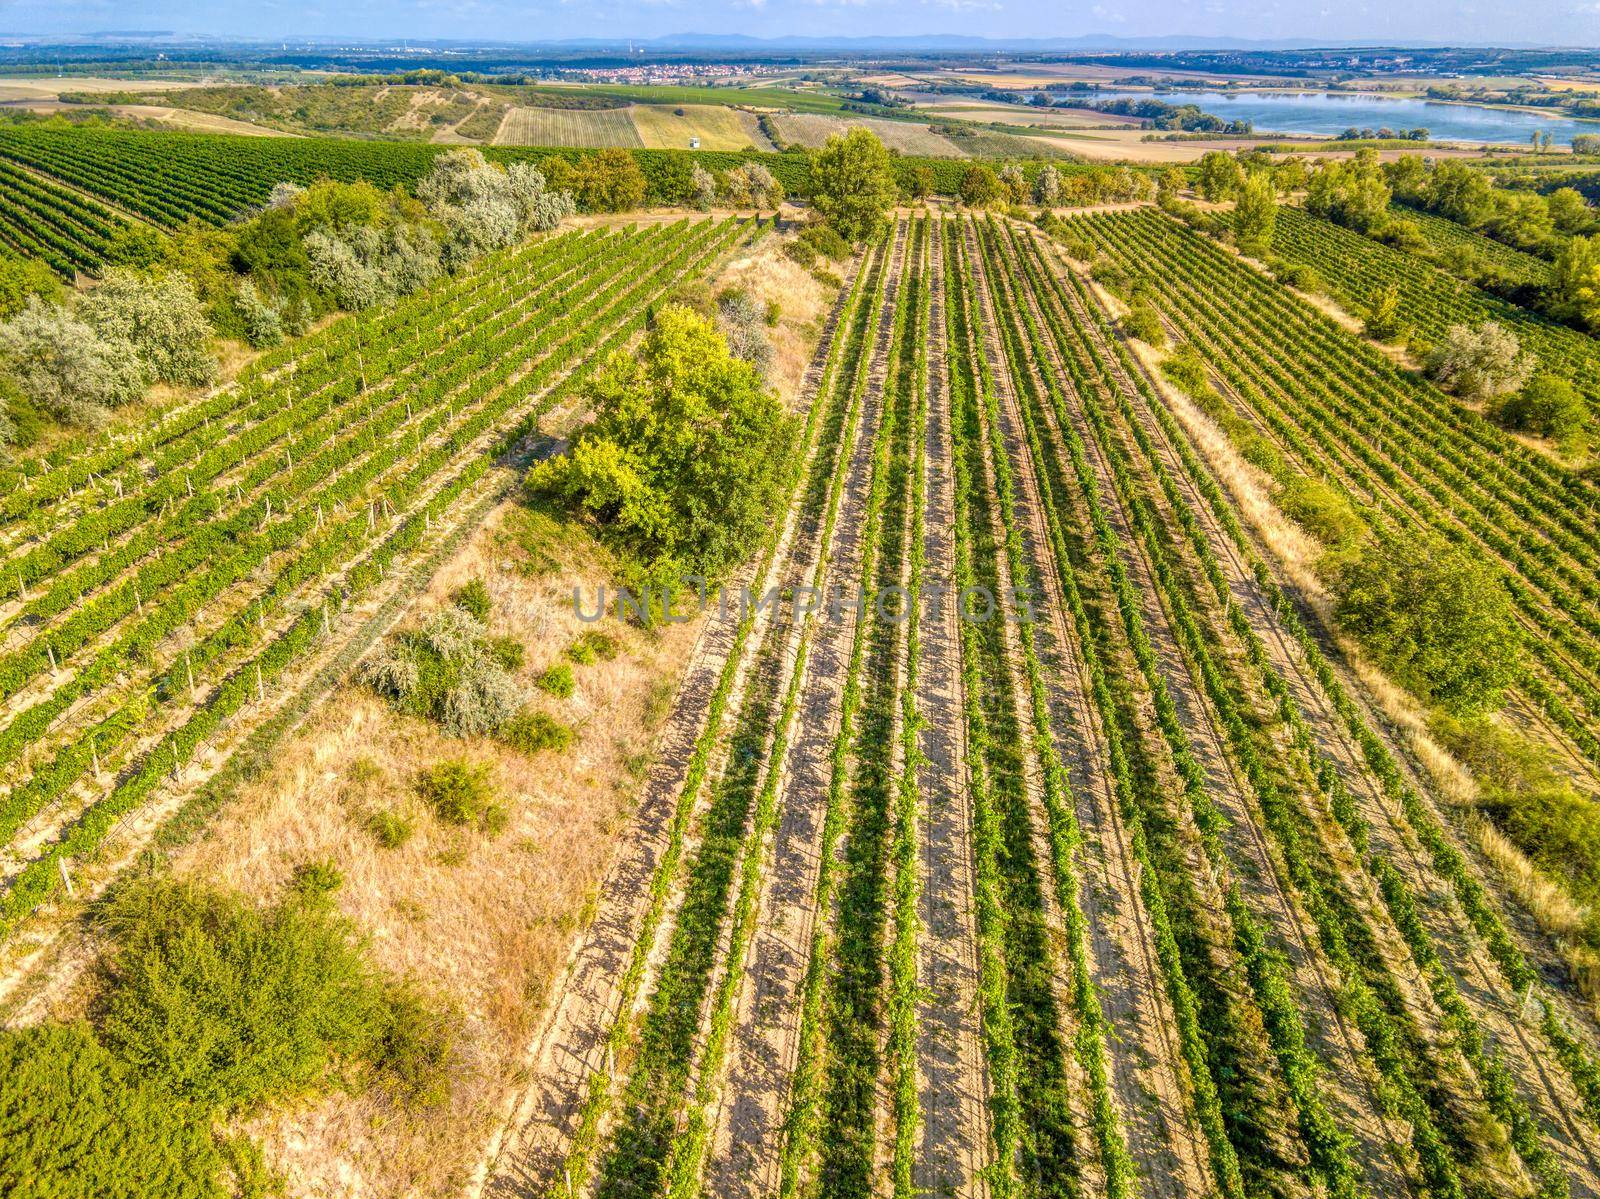 Vineyards in Palava, Czech Republic by artush